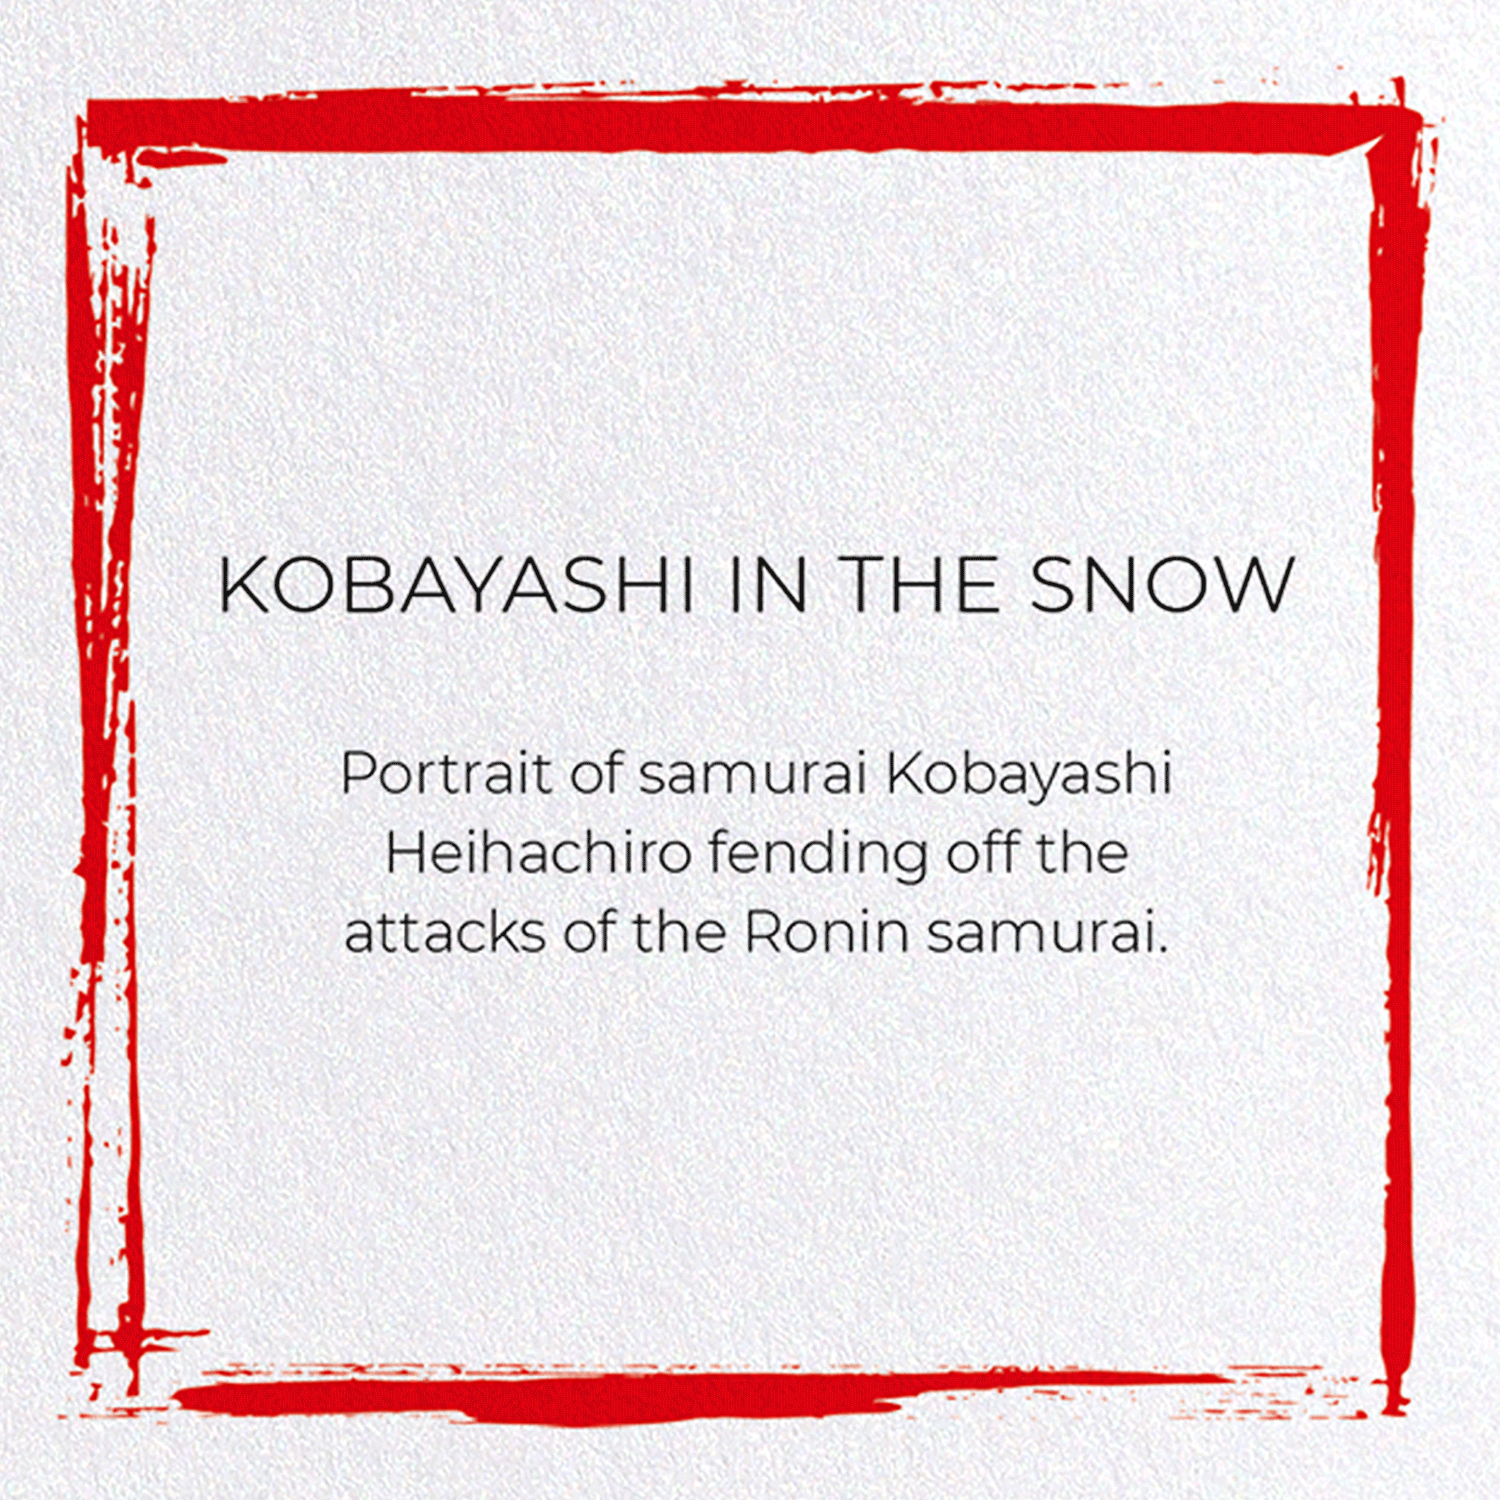 KOBAYASHI IN THE SNOW